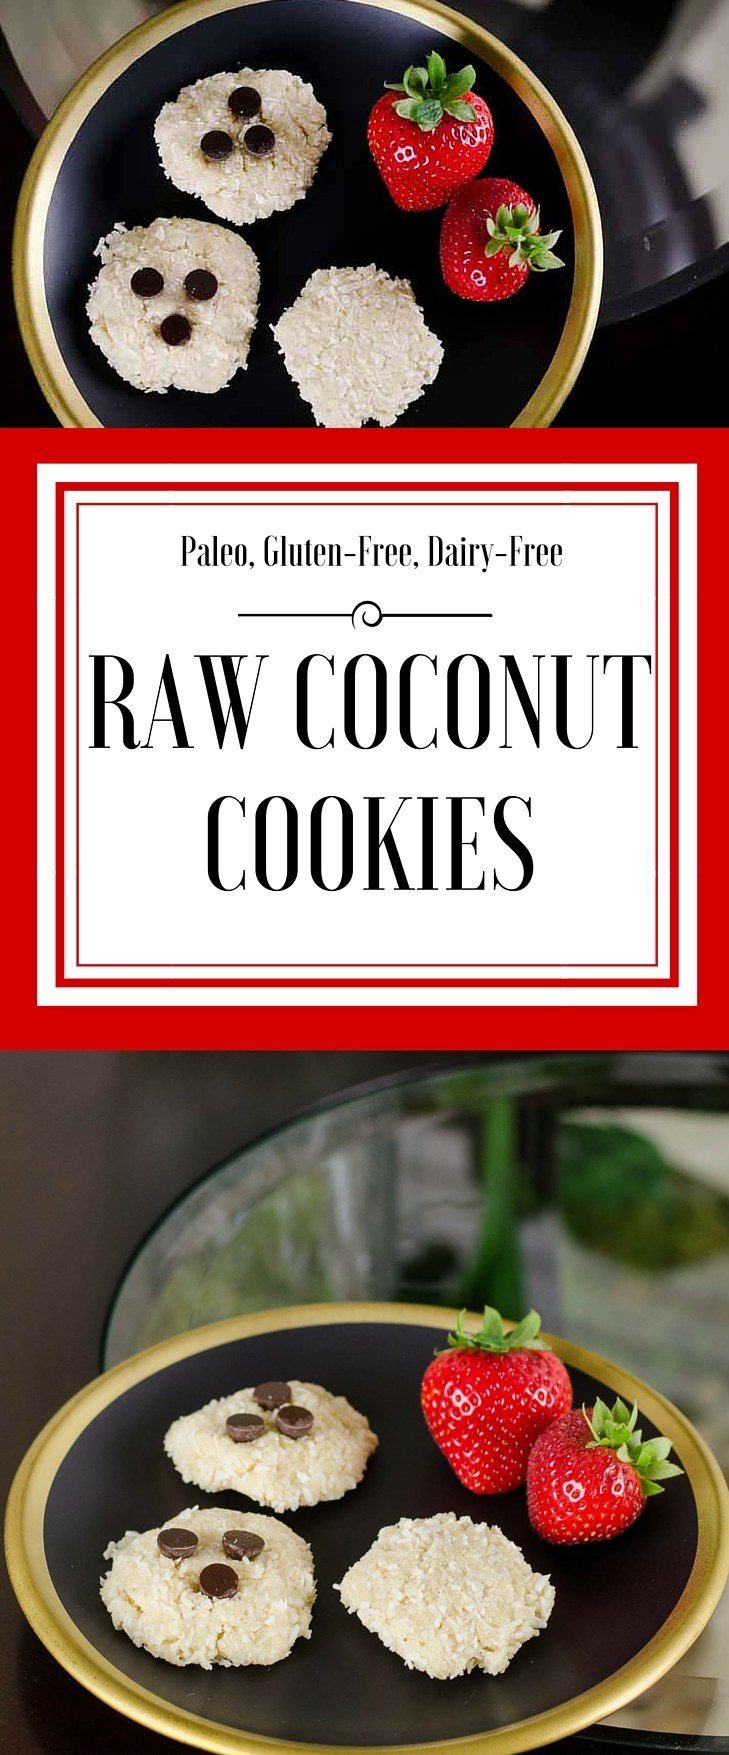 Raw Coconut Cookies Recipe [Paleo, Gluten-Free, Dairy-Free] #paleo #recipes #glutenfree   https://paleoflourish.com/raw-coconut-cookies-recipe-paleo-gf-dairyfree